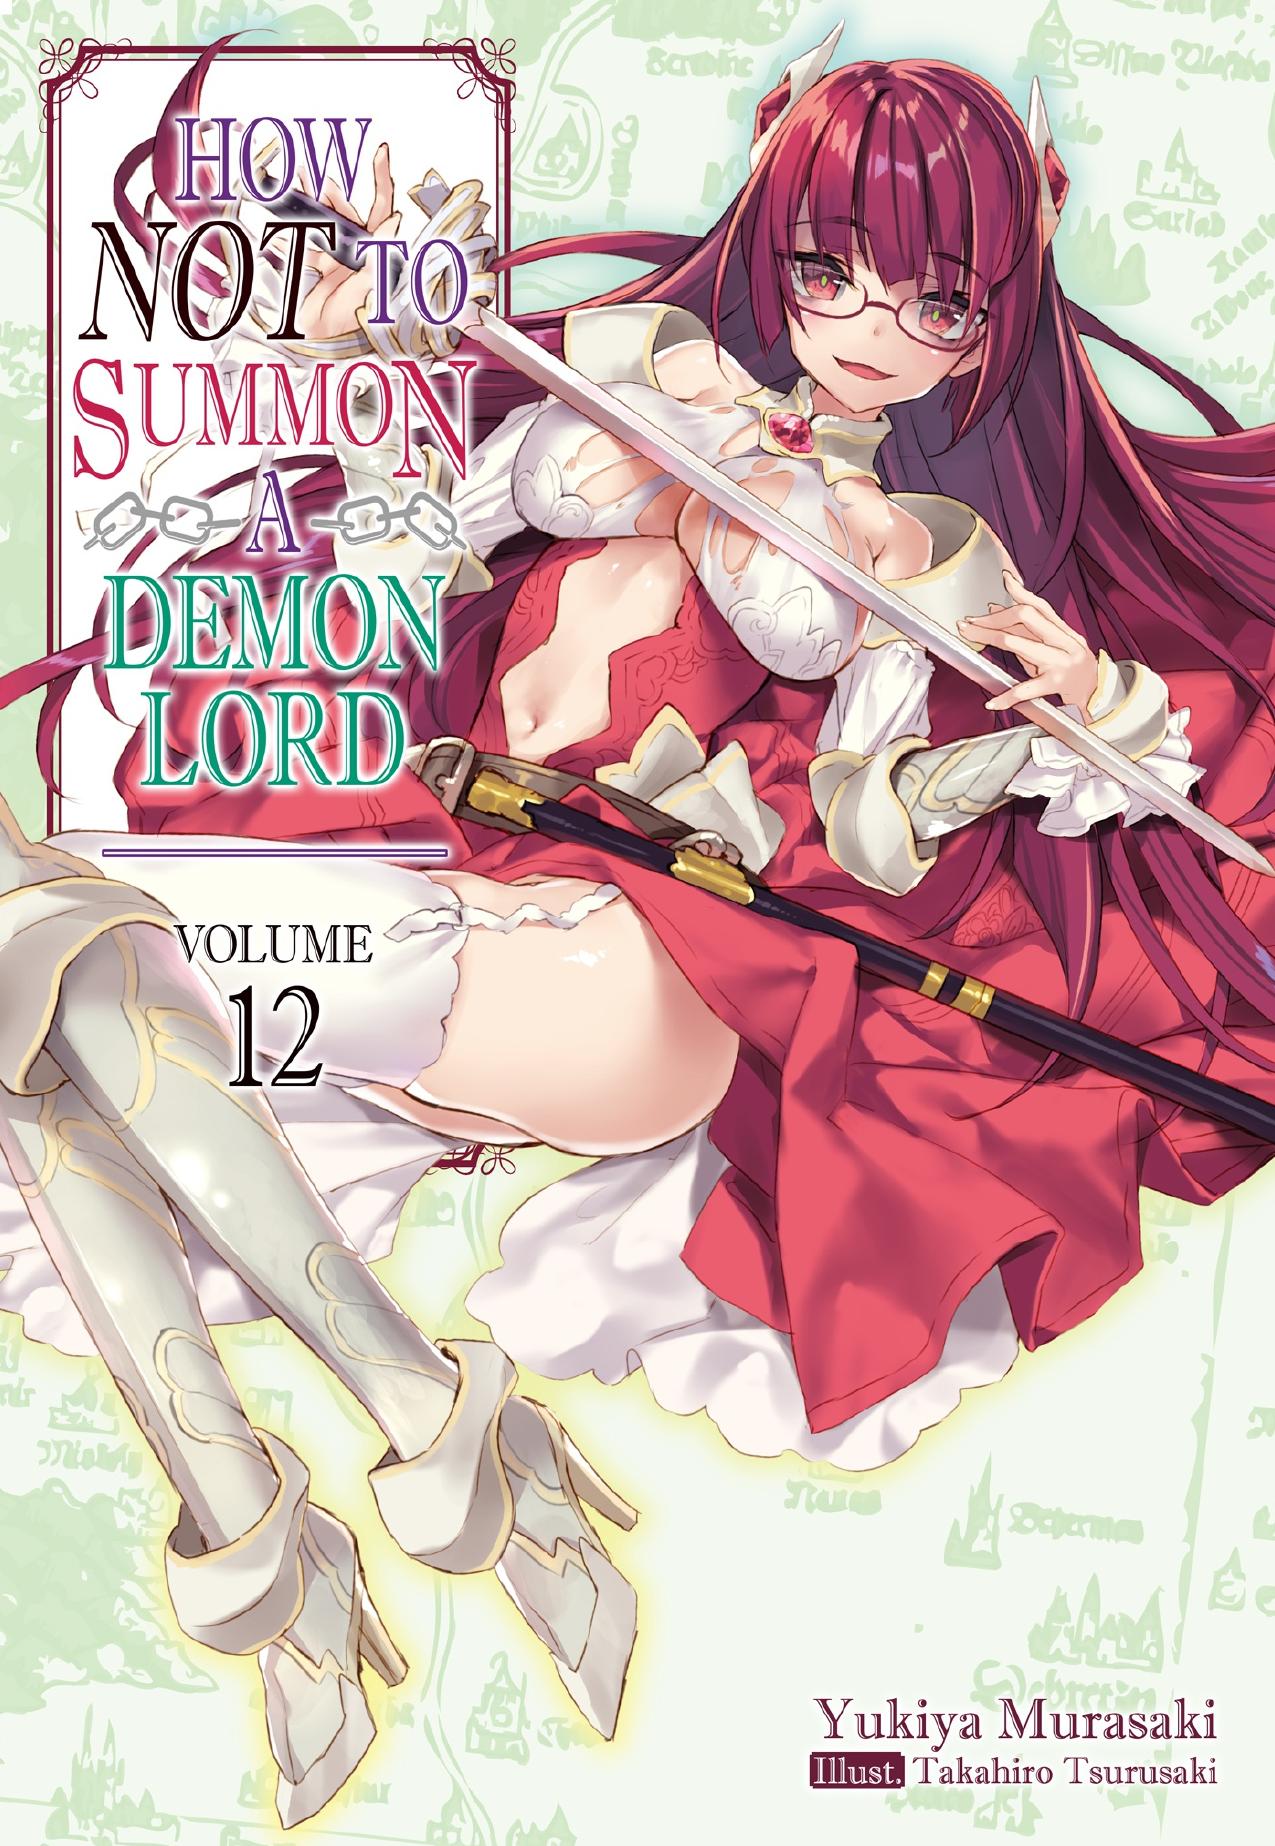 How NOT to Summon a Demon Lord: Volume 12 by Yukiya Murasaki